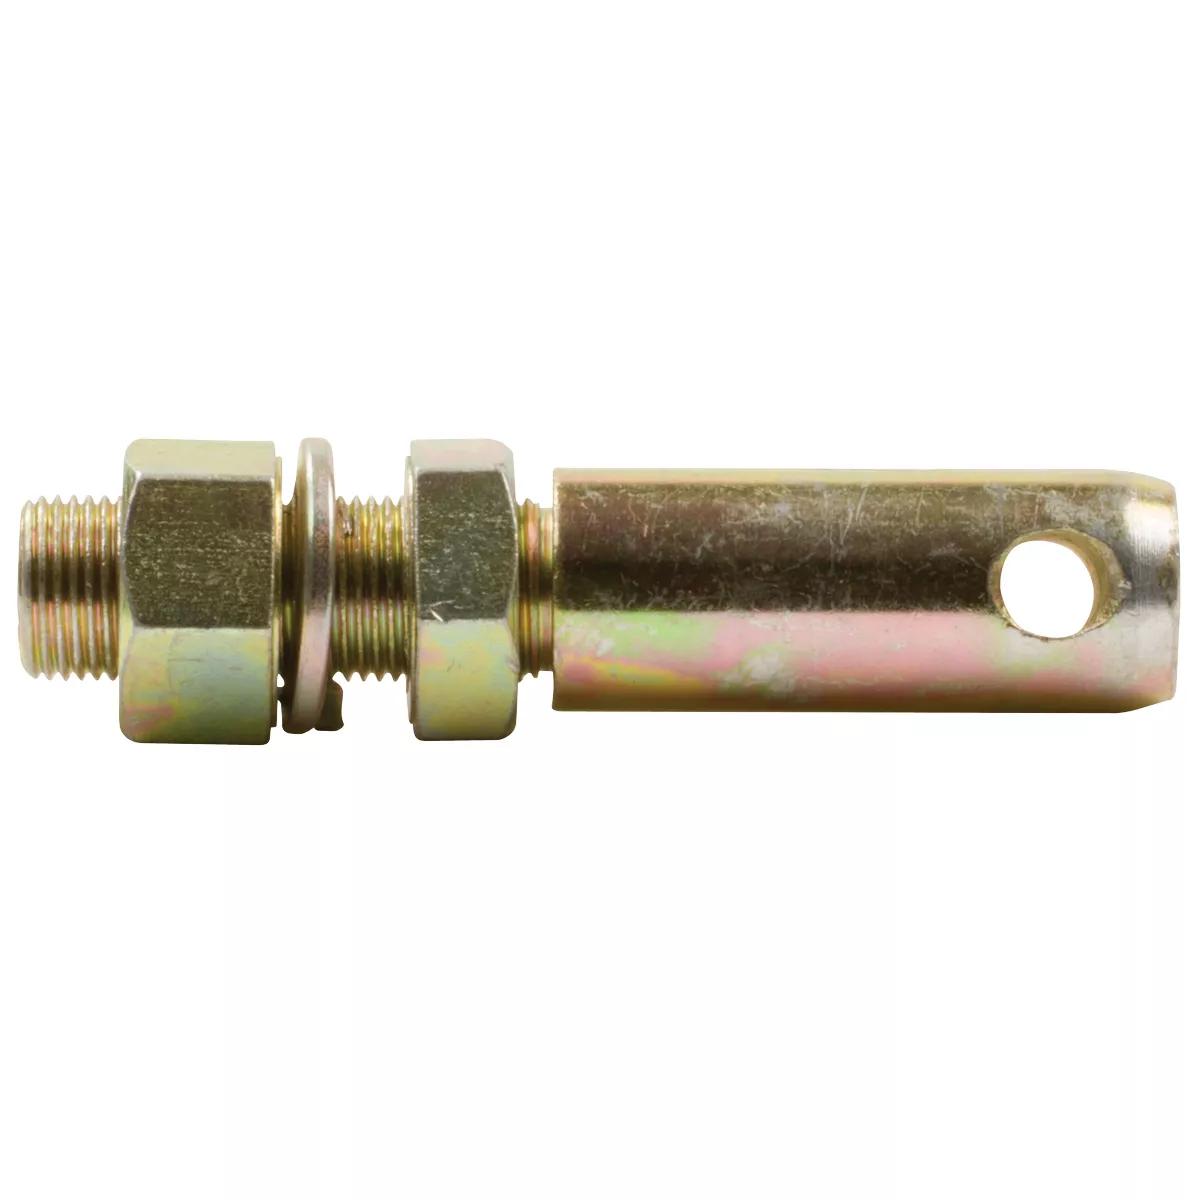 1-1/8" x 7-1/2" Adjustable Lift Arm Pin